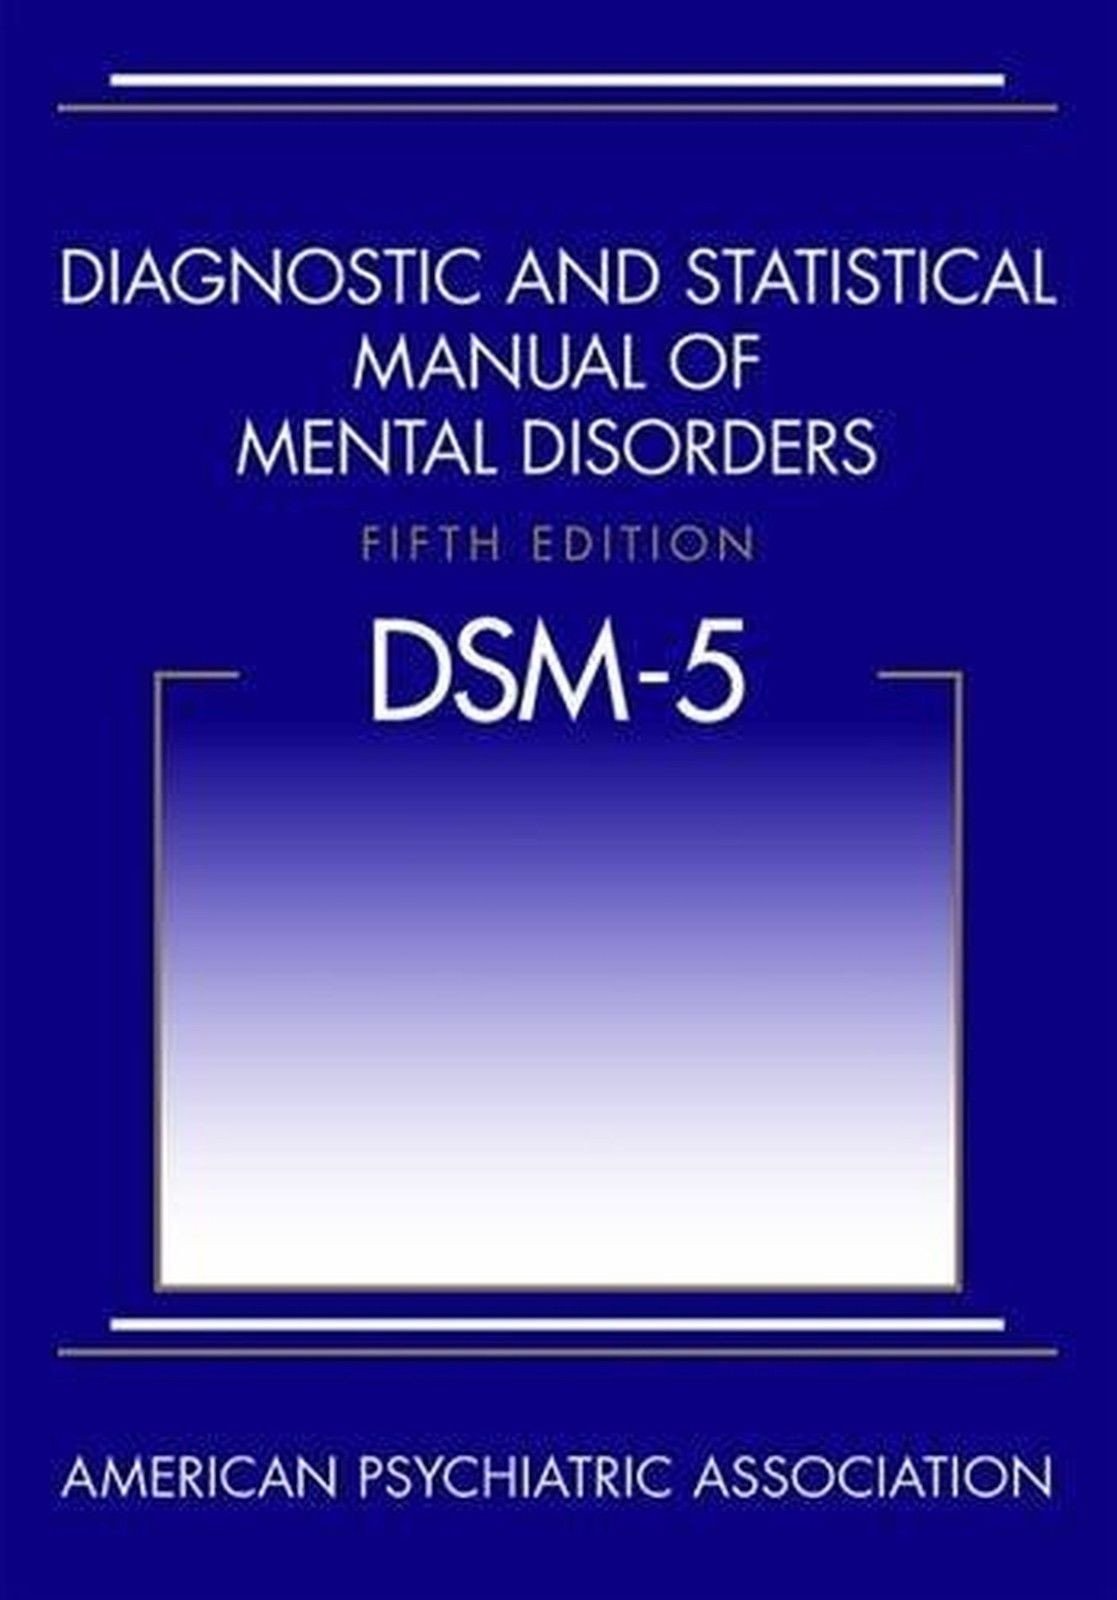 dsm 5 criteria for current severe ptsd